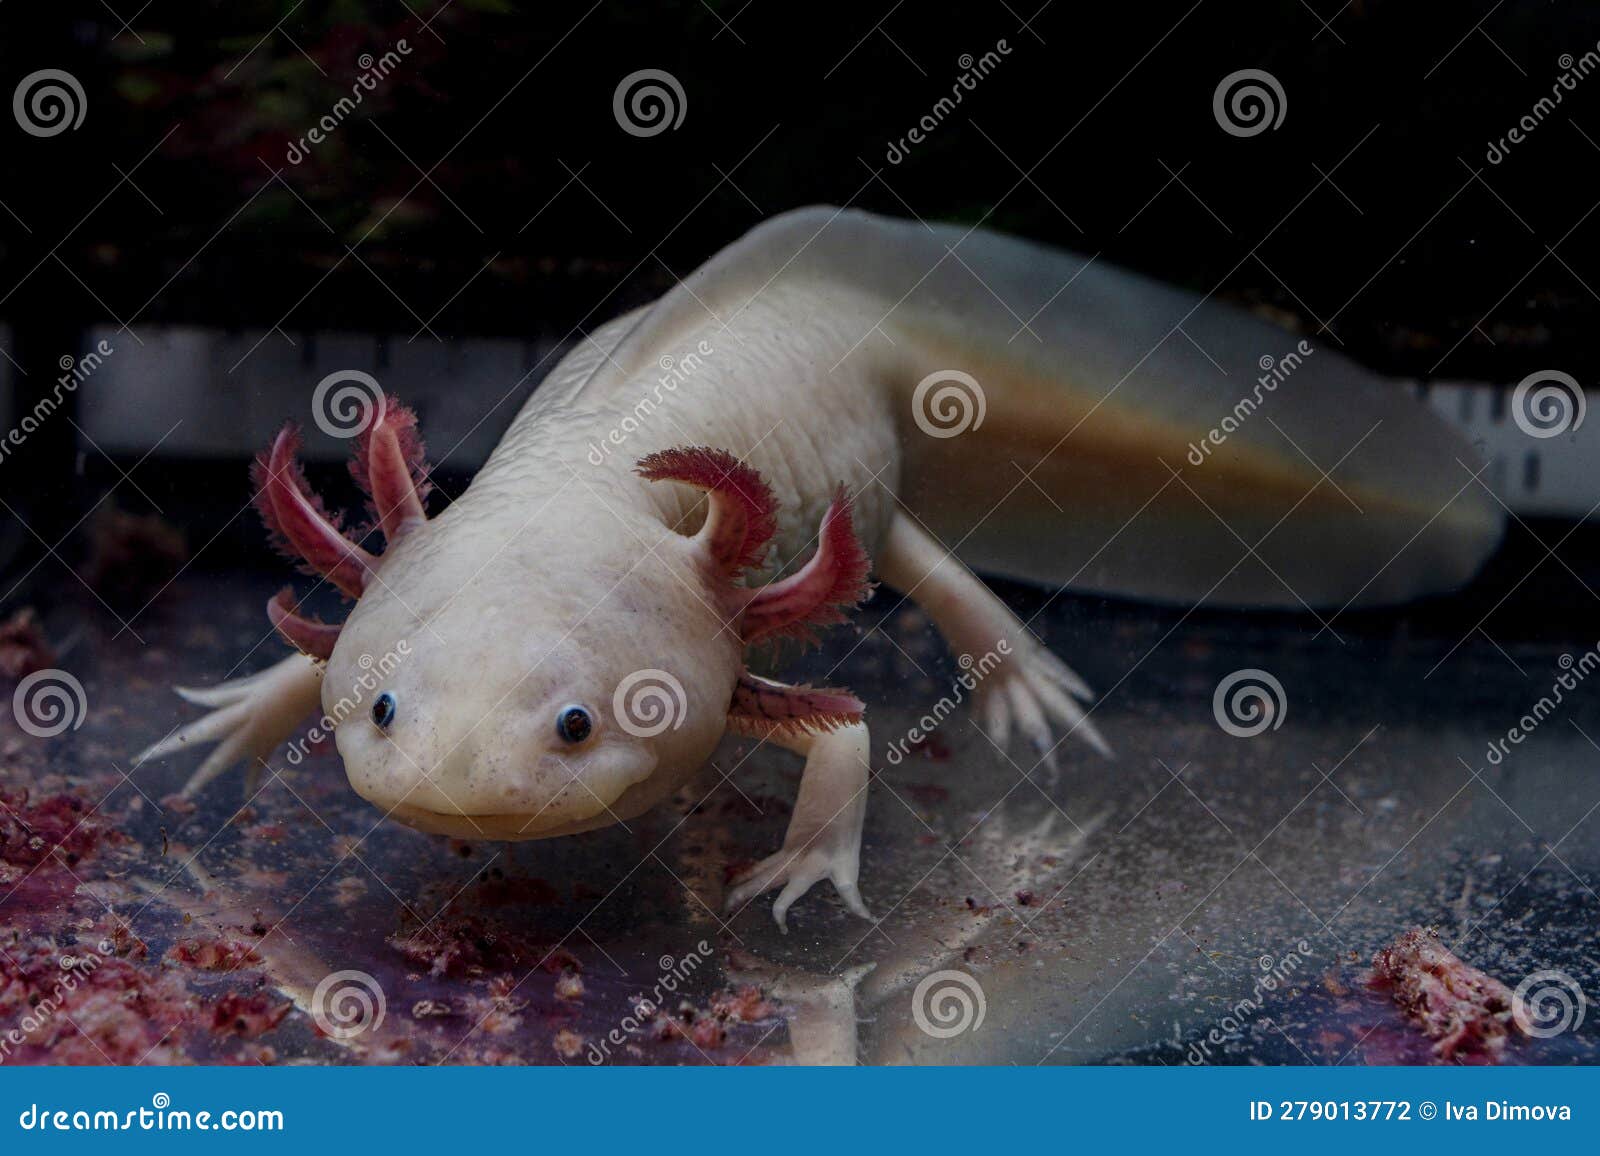 Axolotl Food Stock Photos - Free & Royalty-Free Stock Photos from Dreamstime